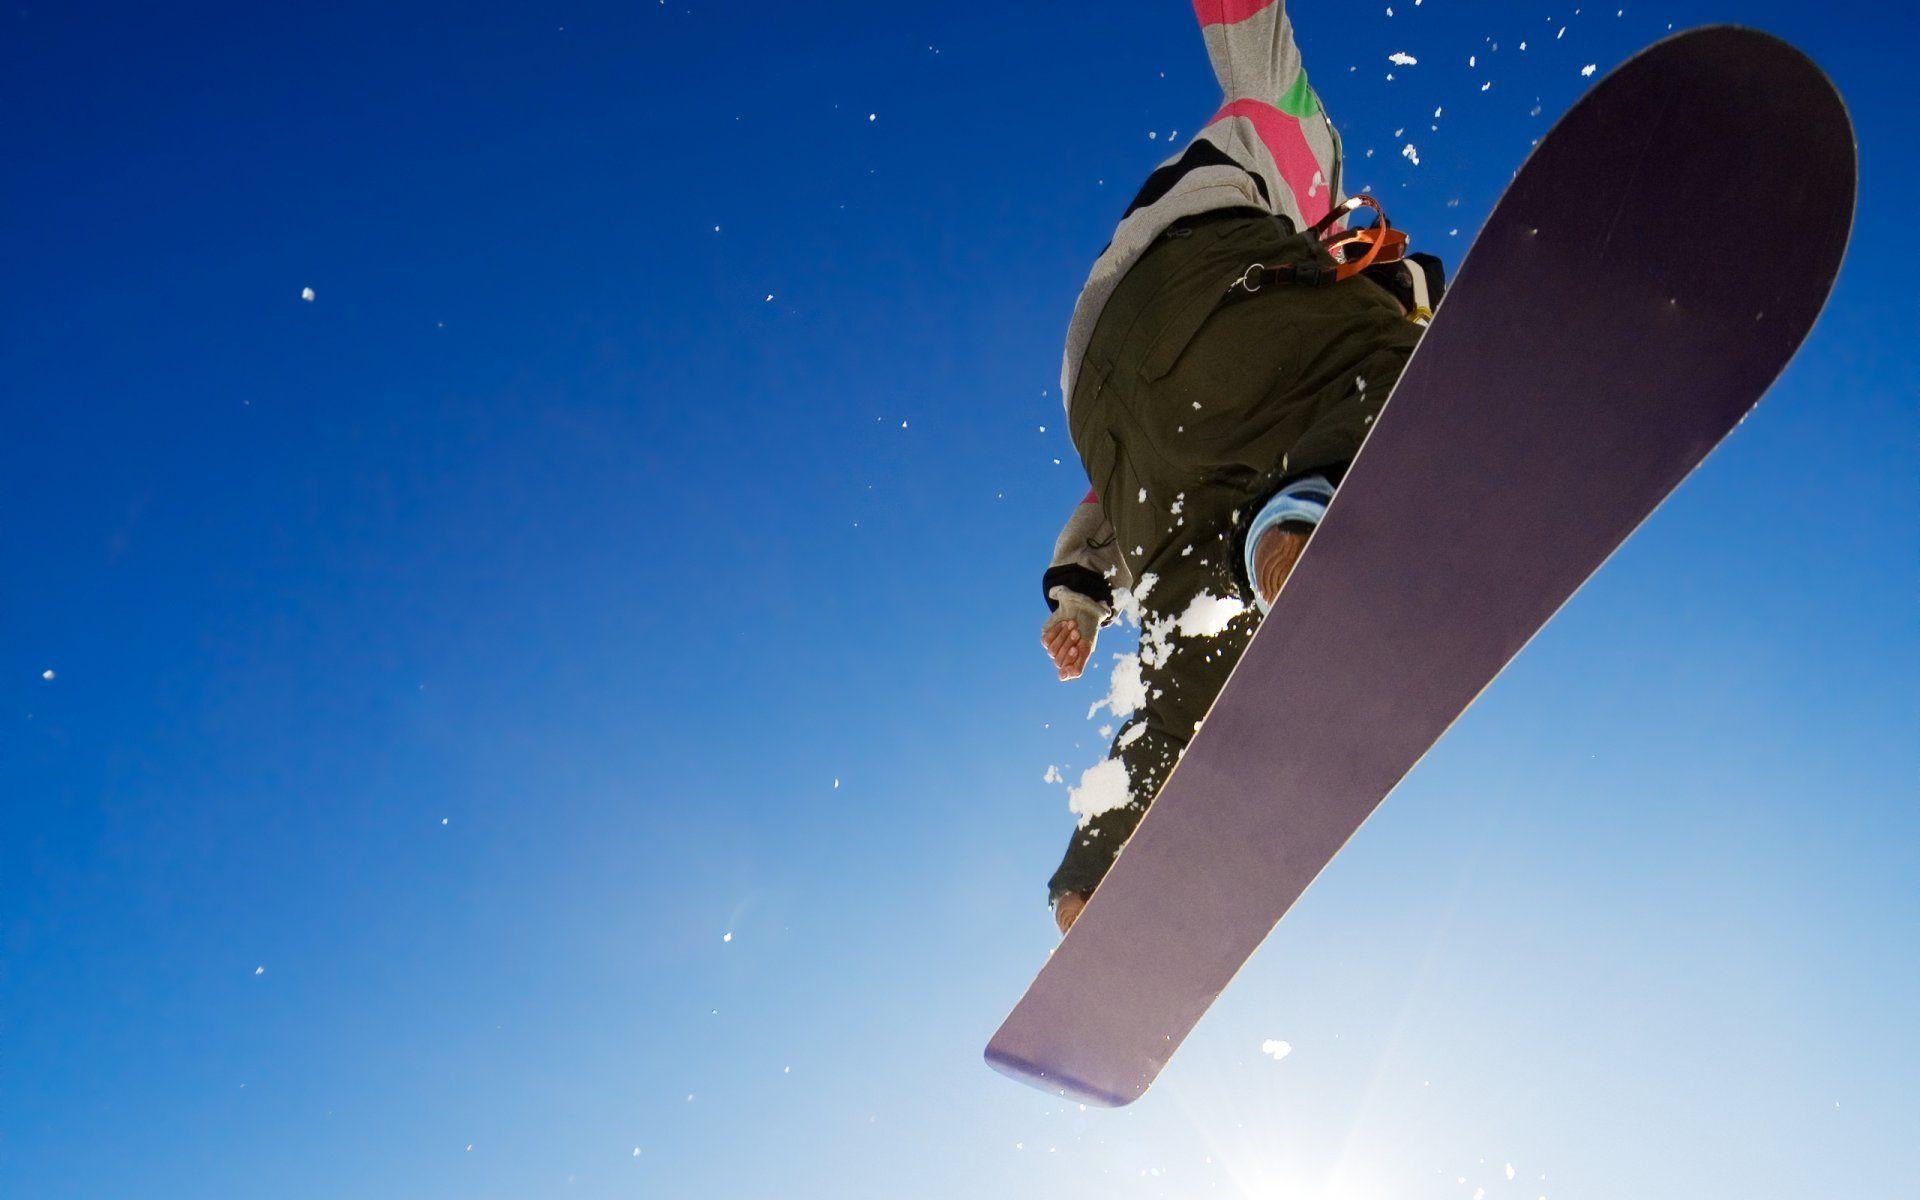 winter sky sports snowboarding guy jump extreme adrenaline image